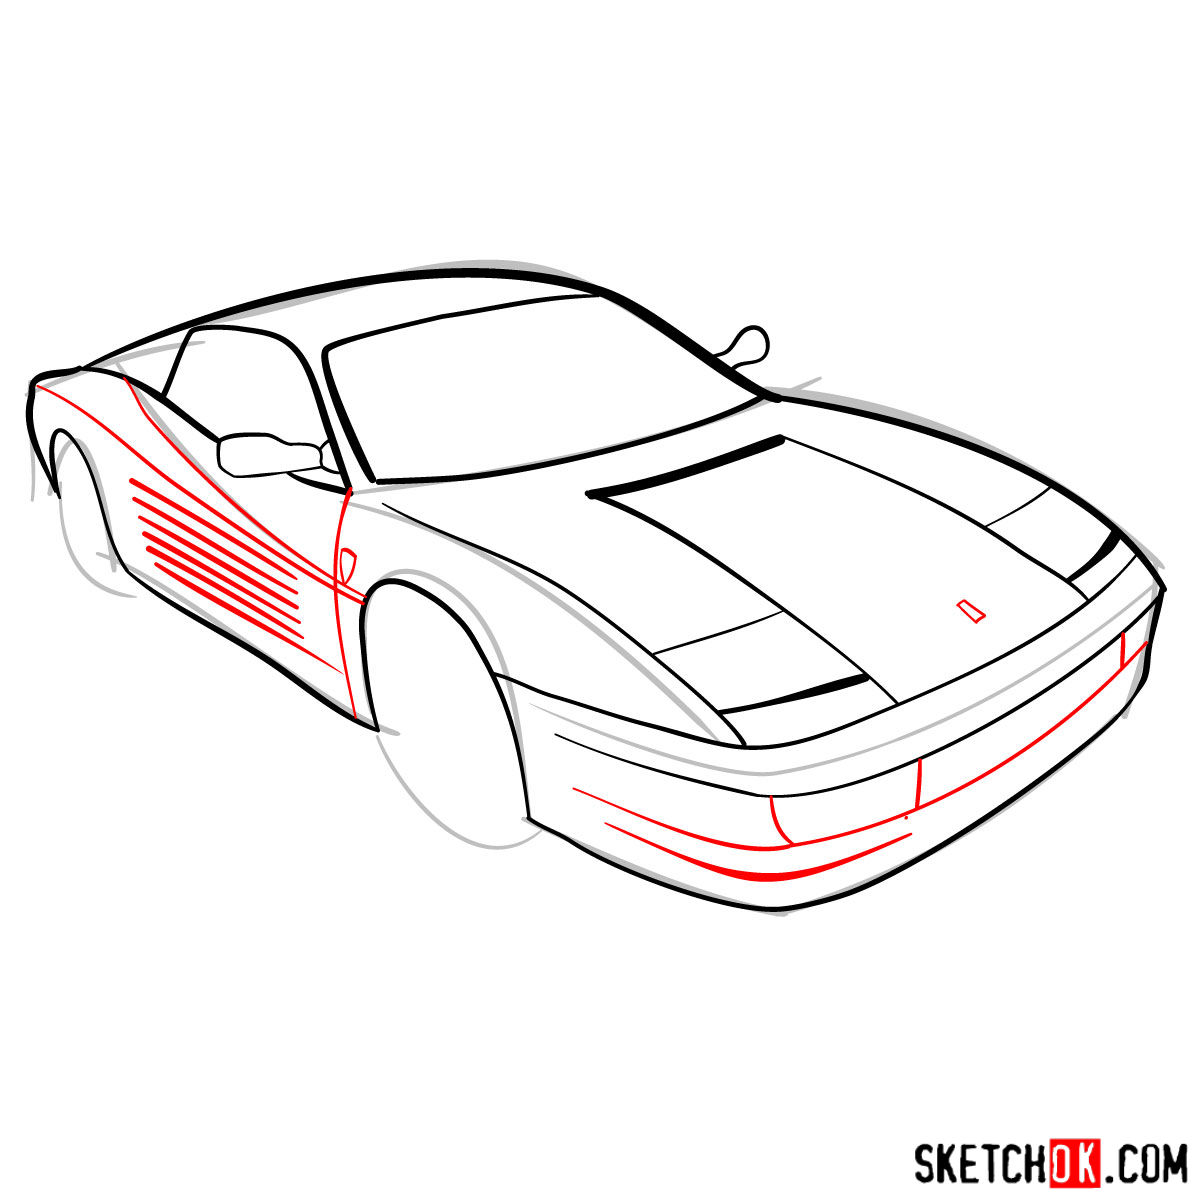 How to draw Ferrari Testarossa supercar - step 07